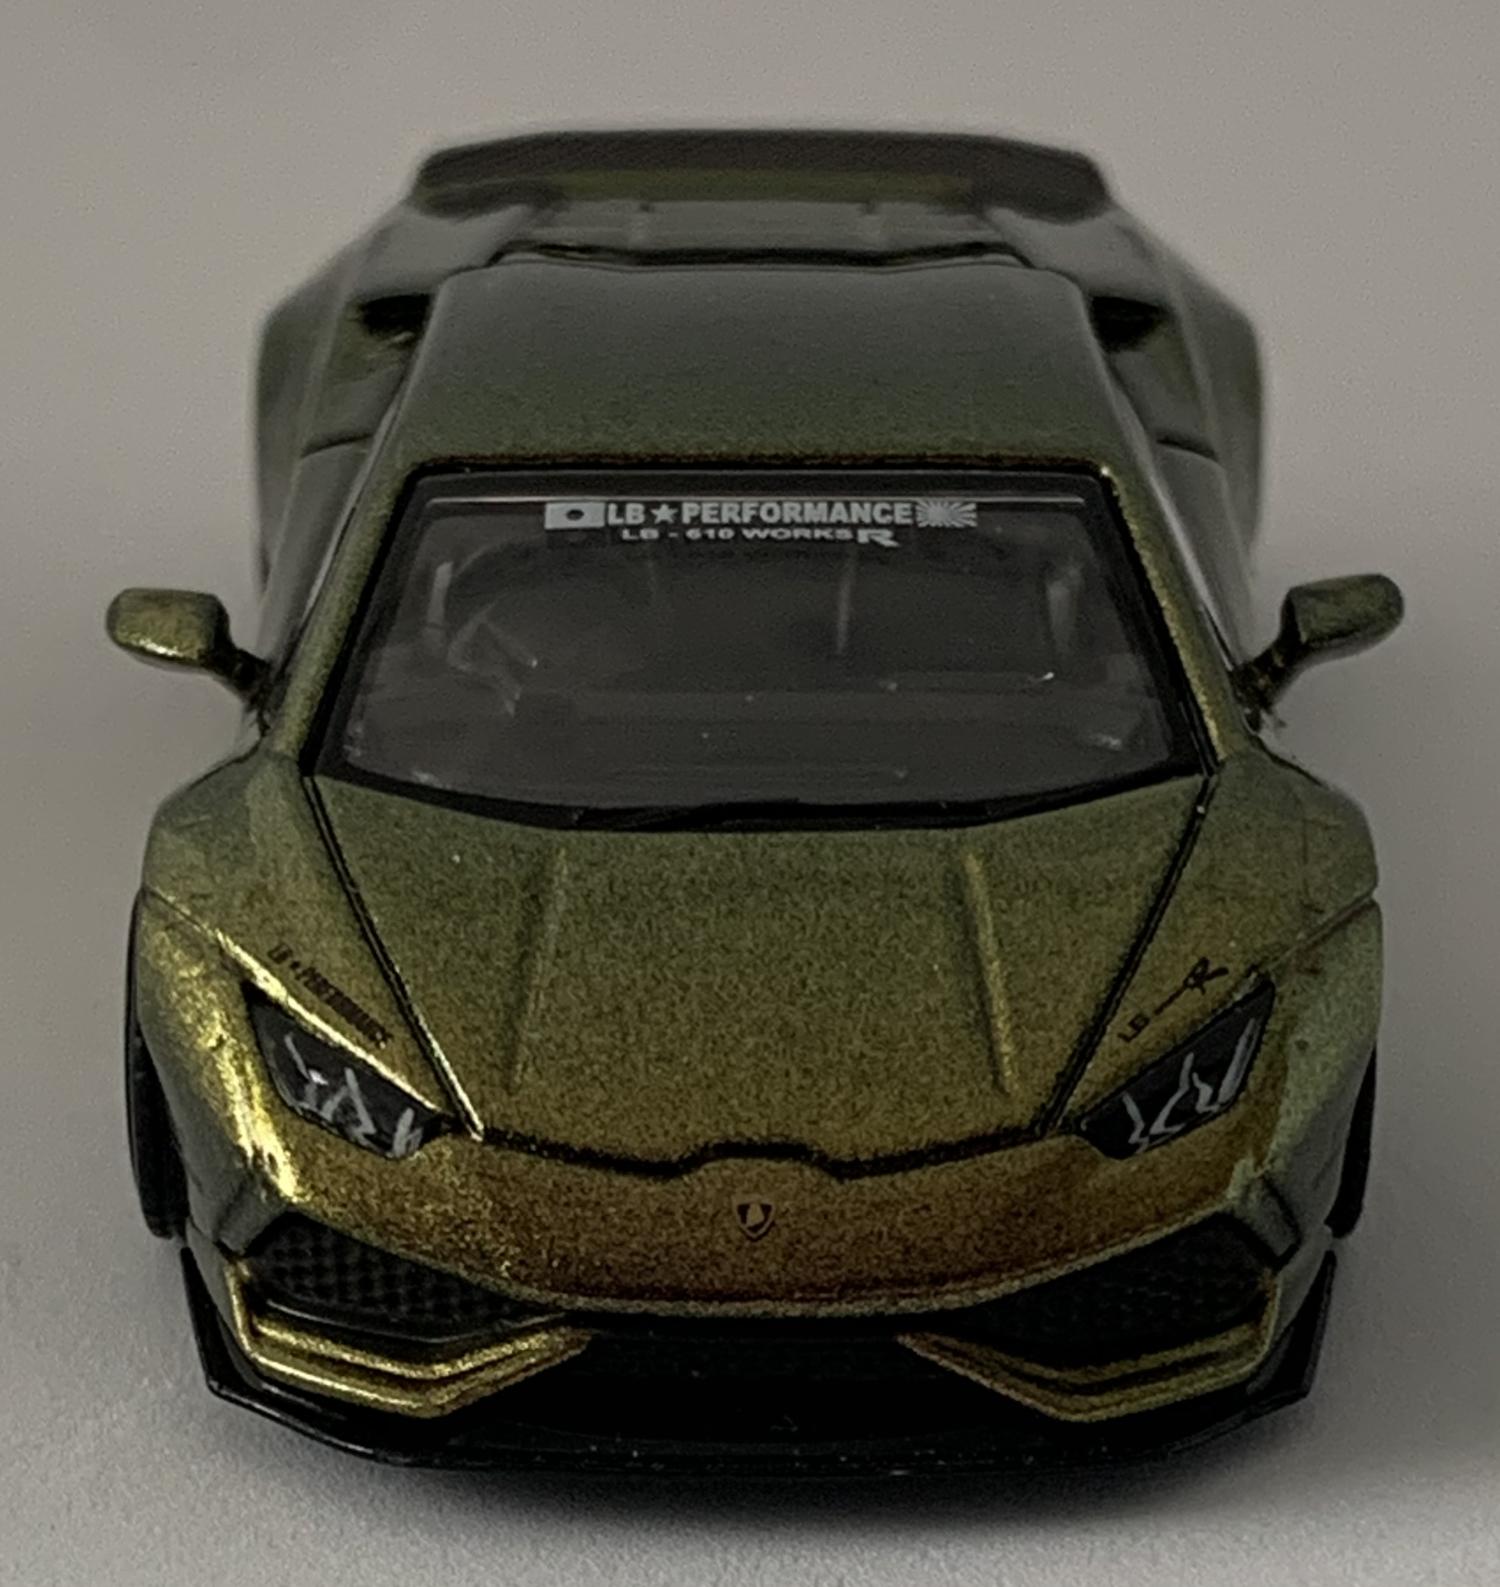 Lamborghini Huracan LB Works in magic bronze 1:64 scale model from Mini GT